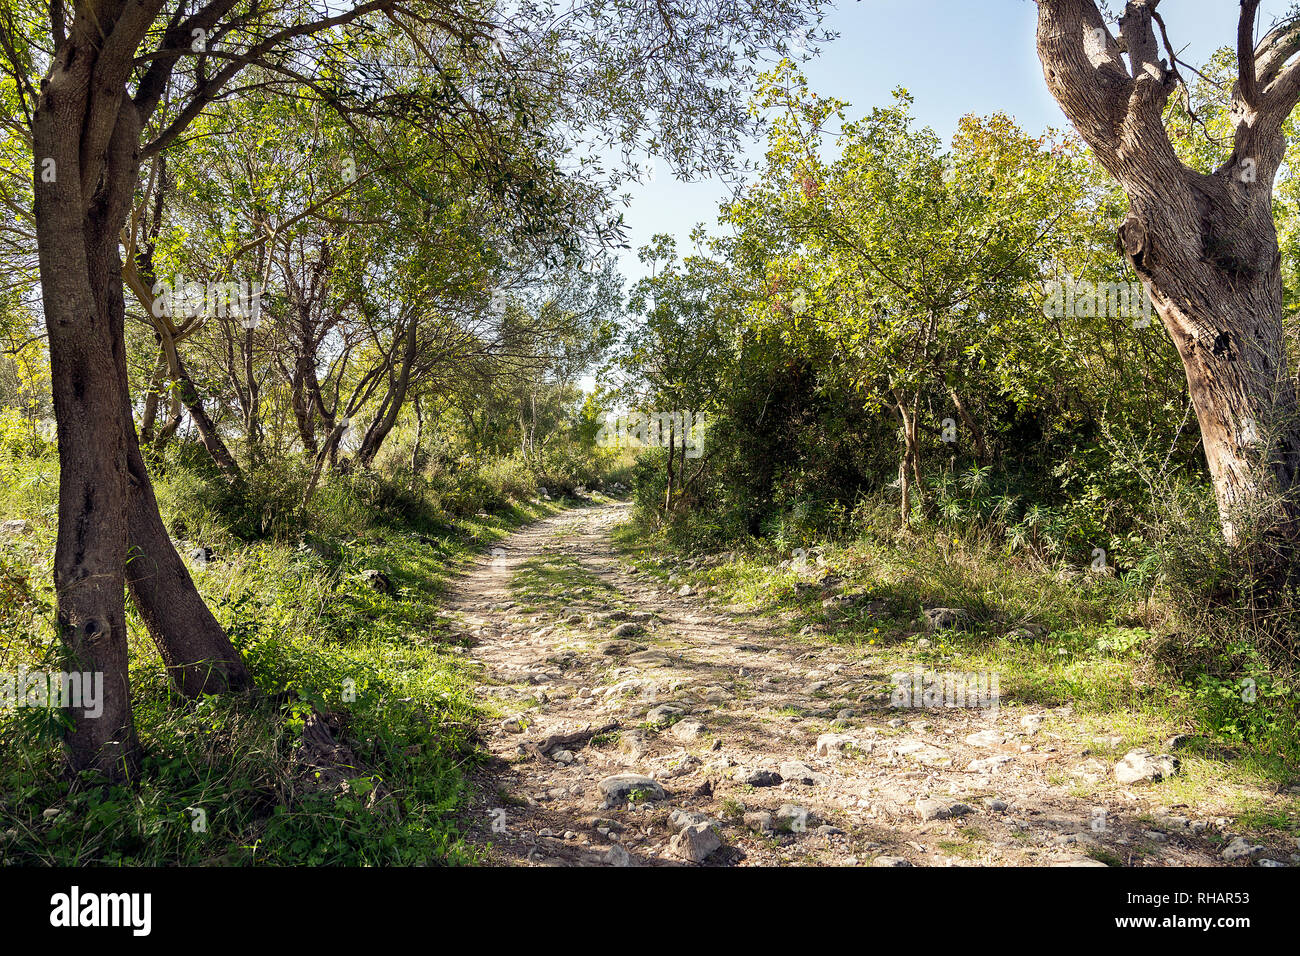 Natural Landscapes of Cava Carosello in Noto - Sicily - Italy Stock Photo